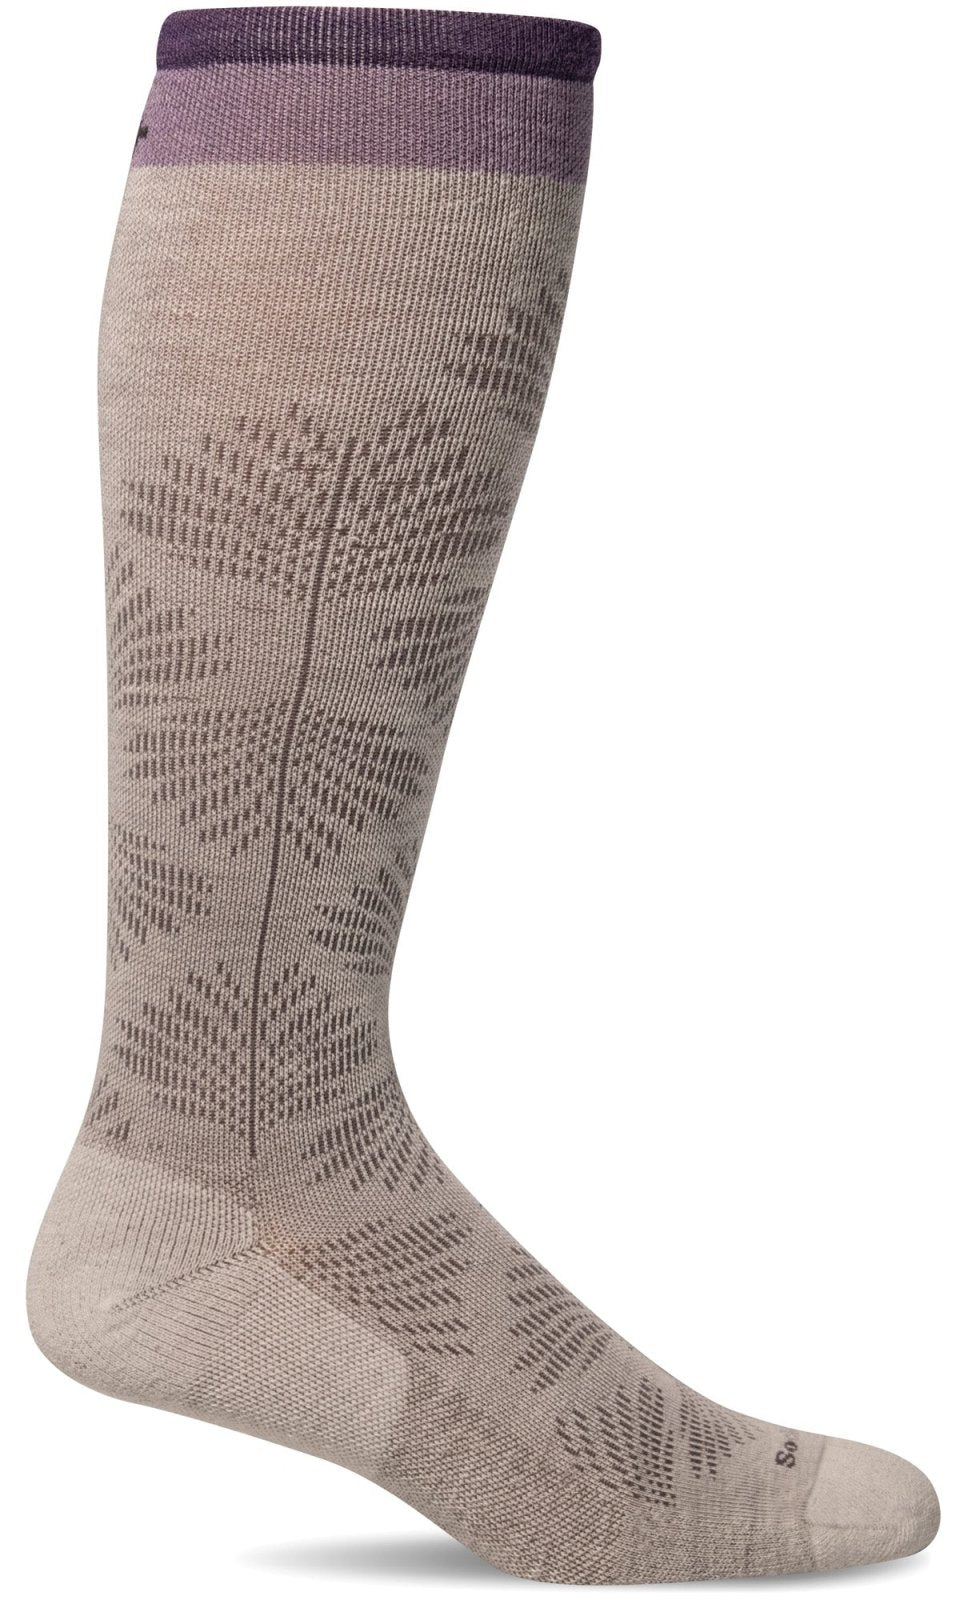 Floral Compression Socks, 15-20 mmHg